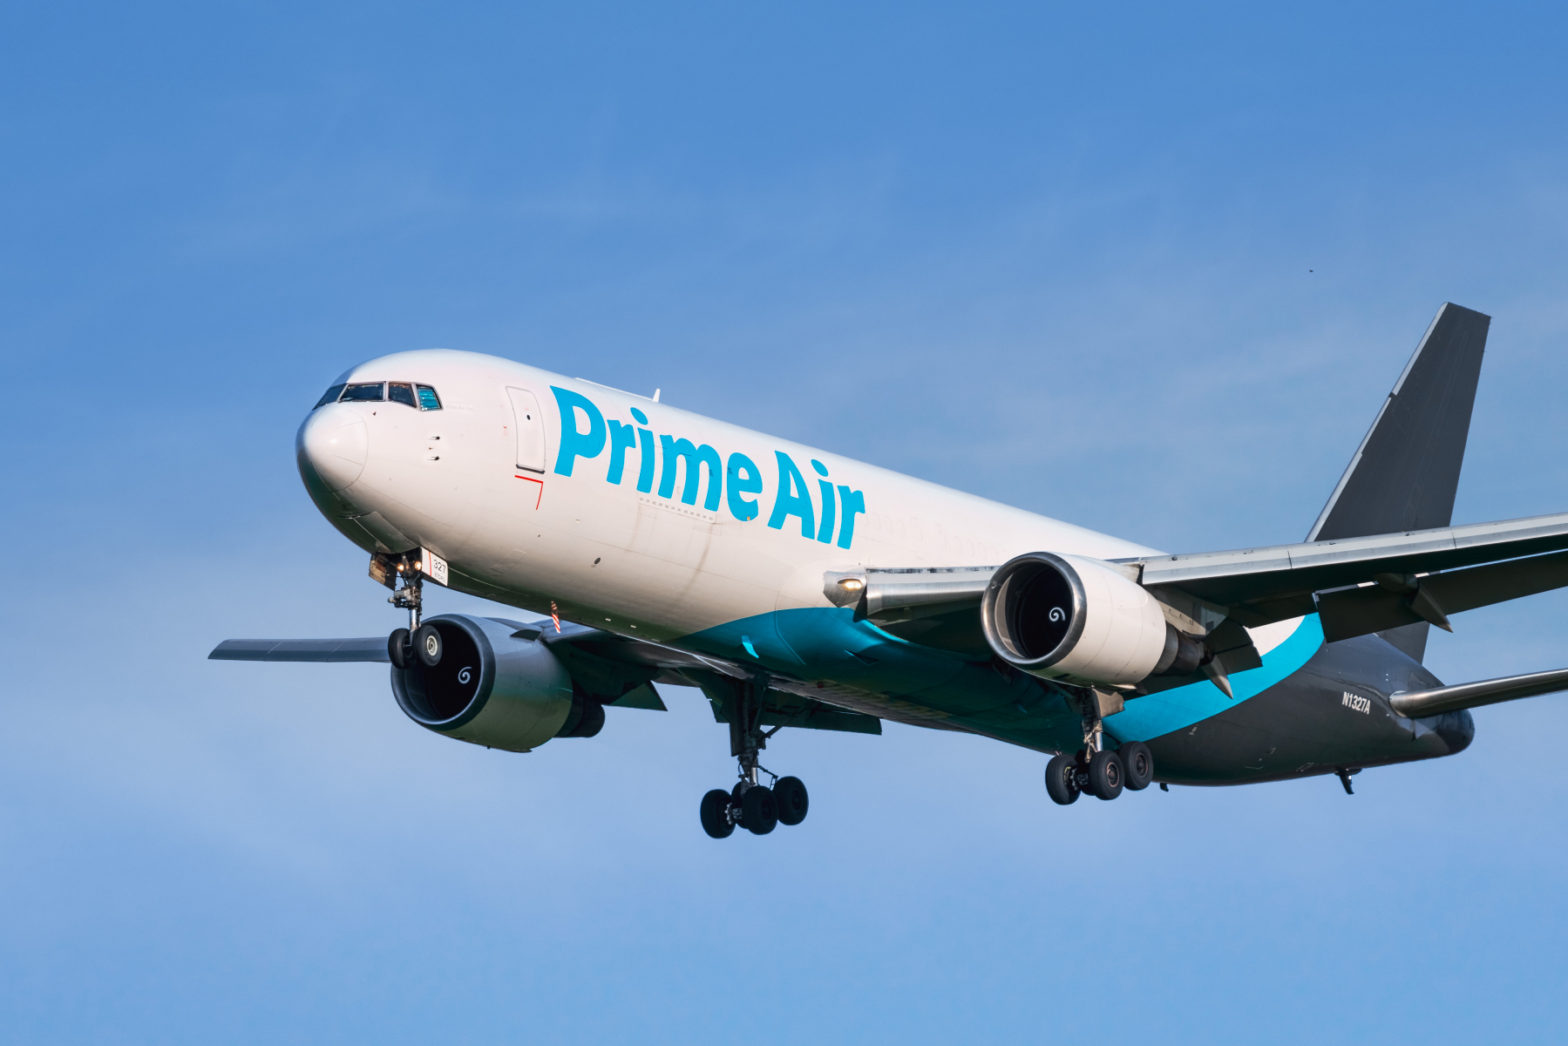 Amazon satsar på flygfrakt i Europa